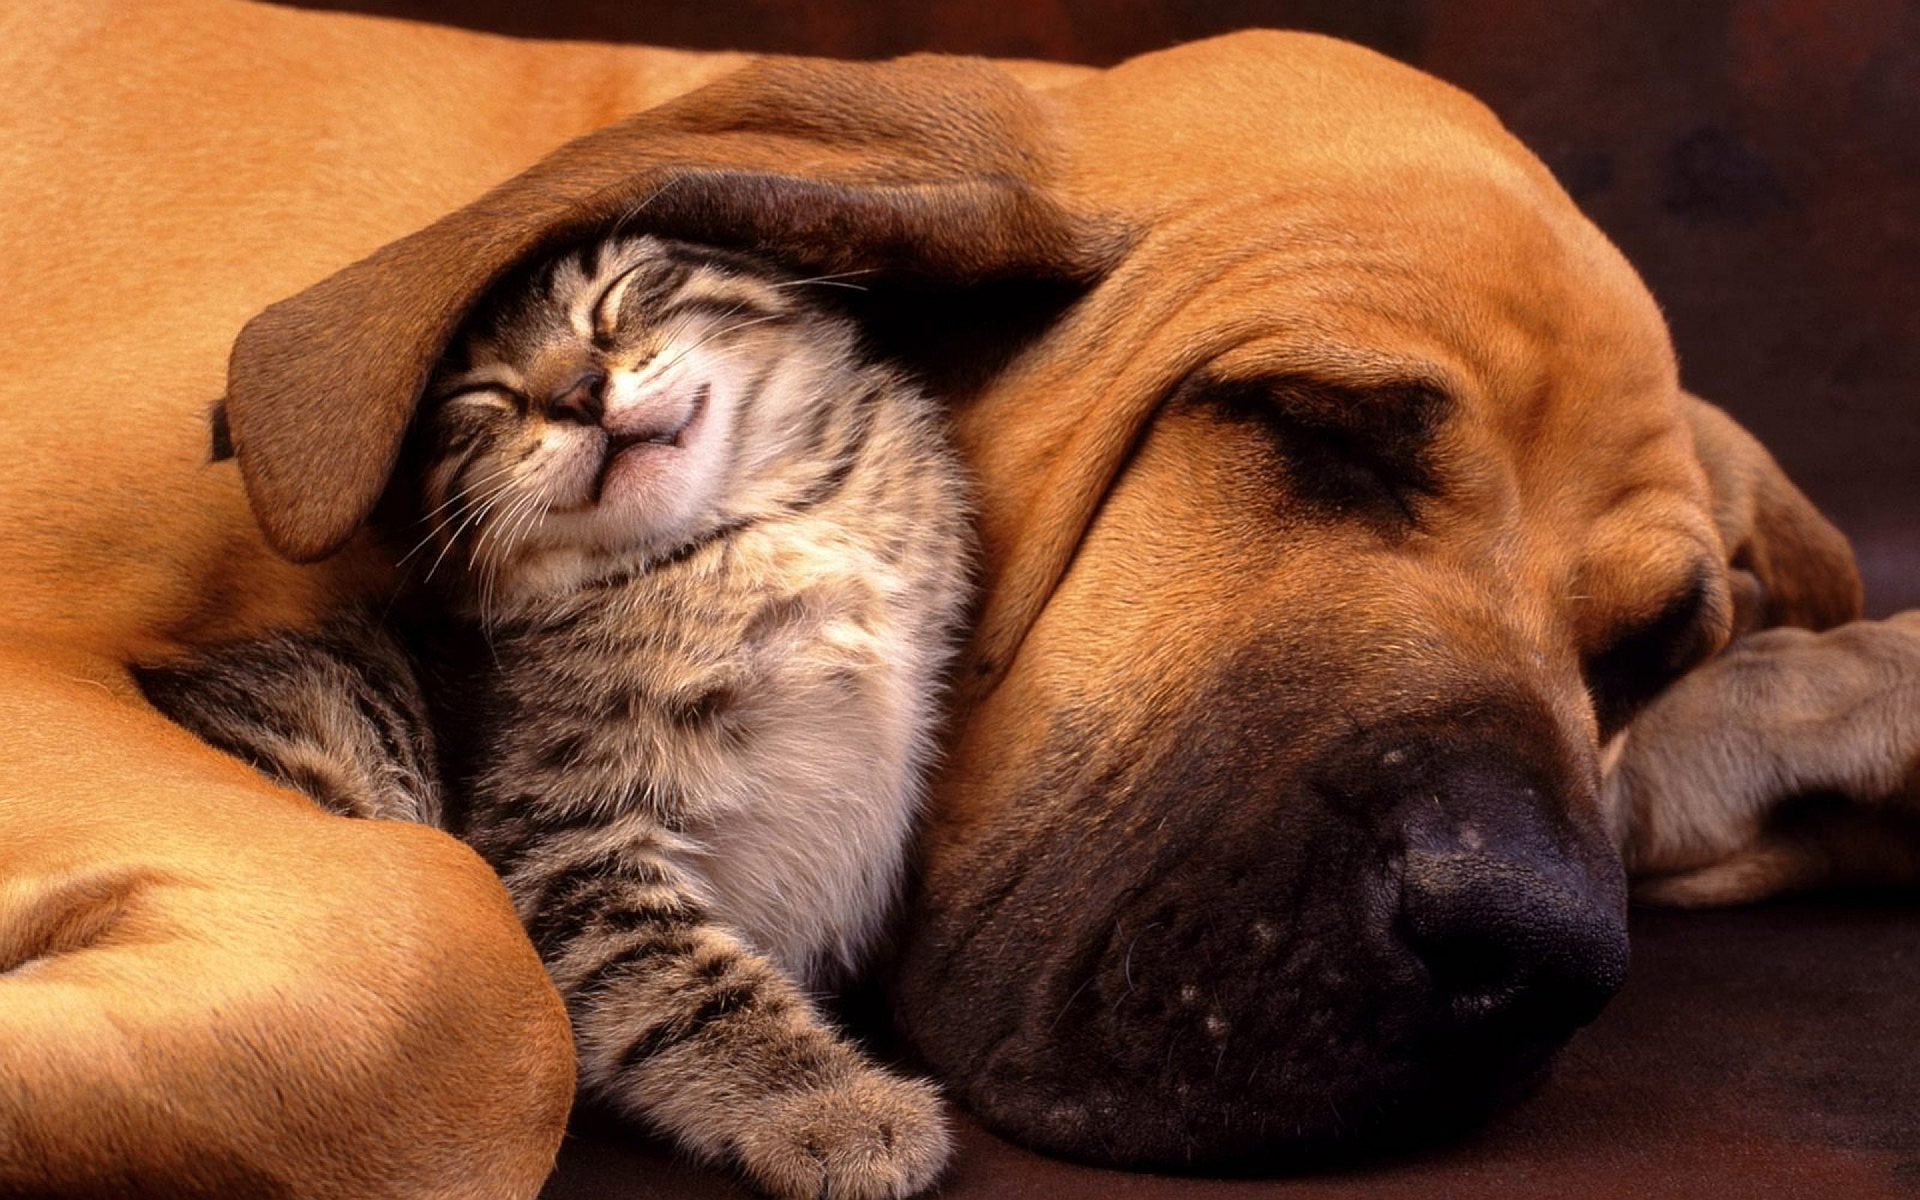 Cat and dog cuddle